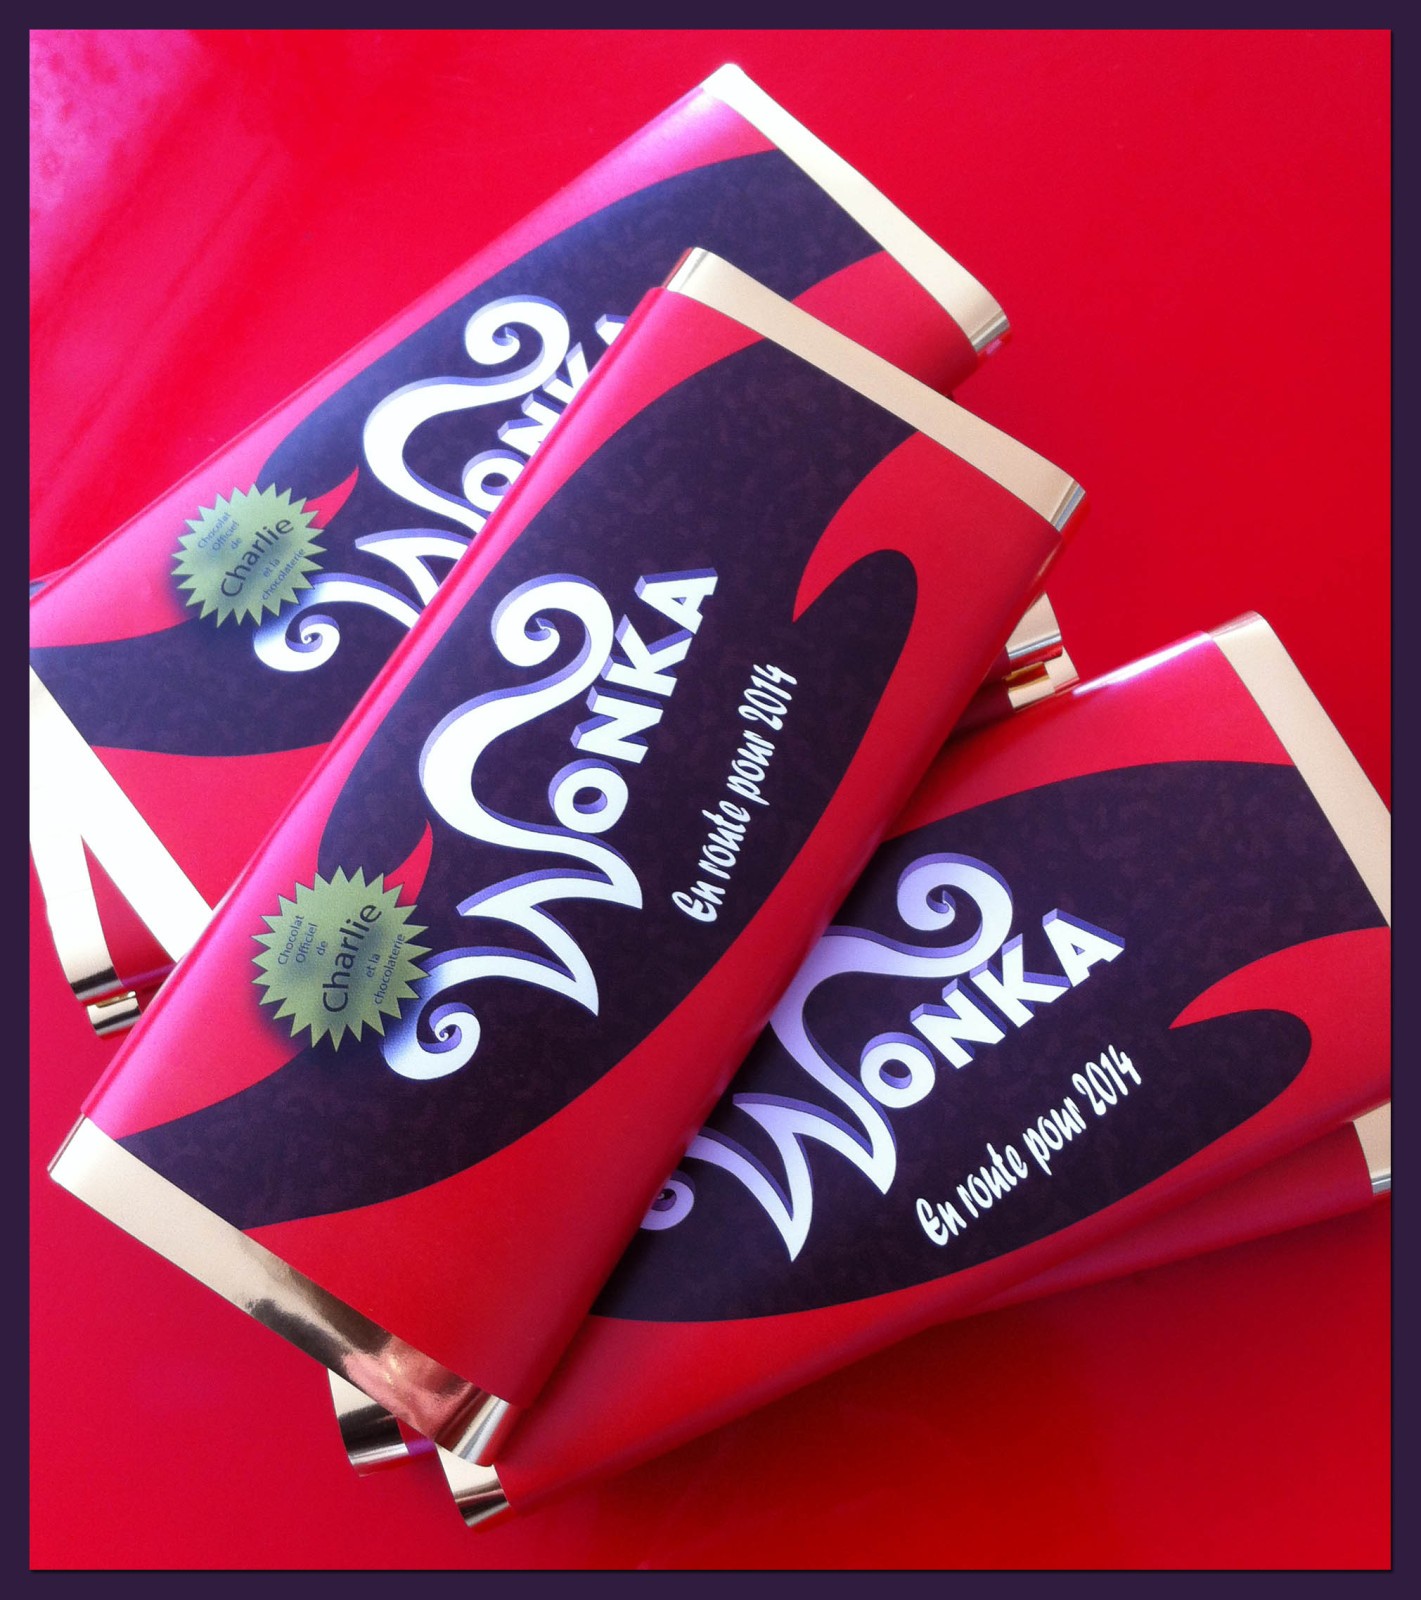 Tablettes de chocolat Wonka - Céline-Emmanuelle